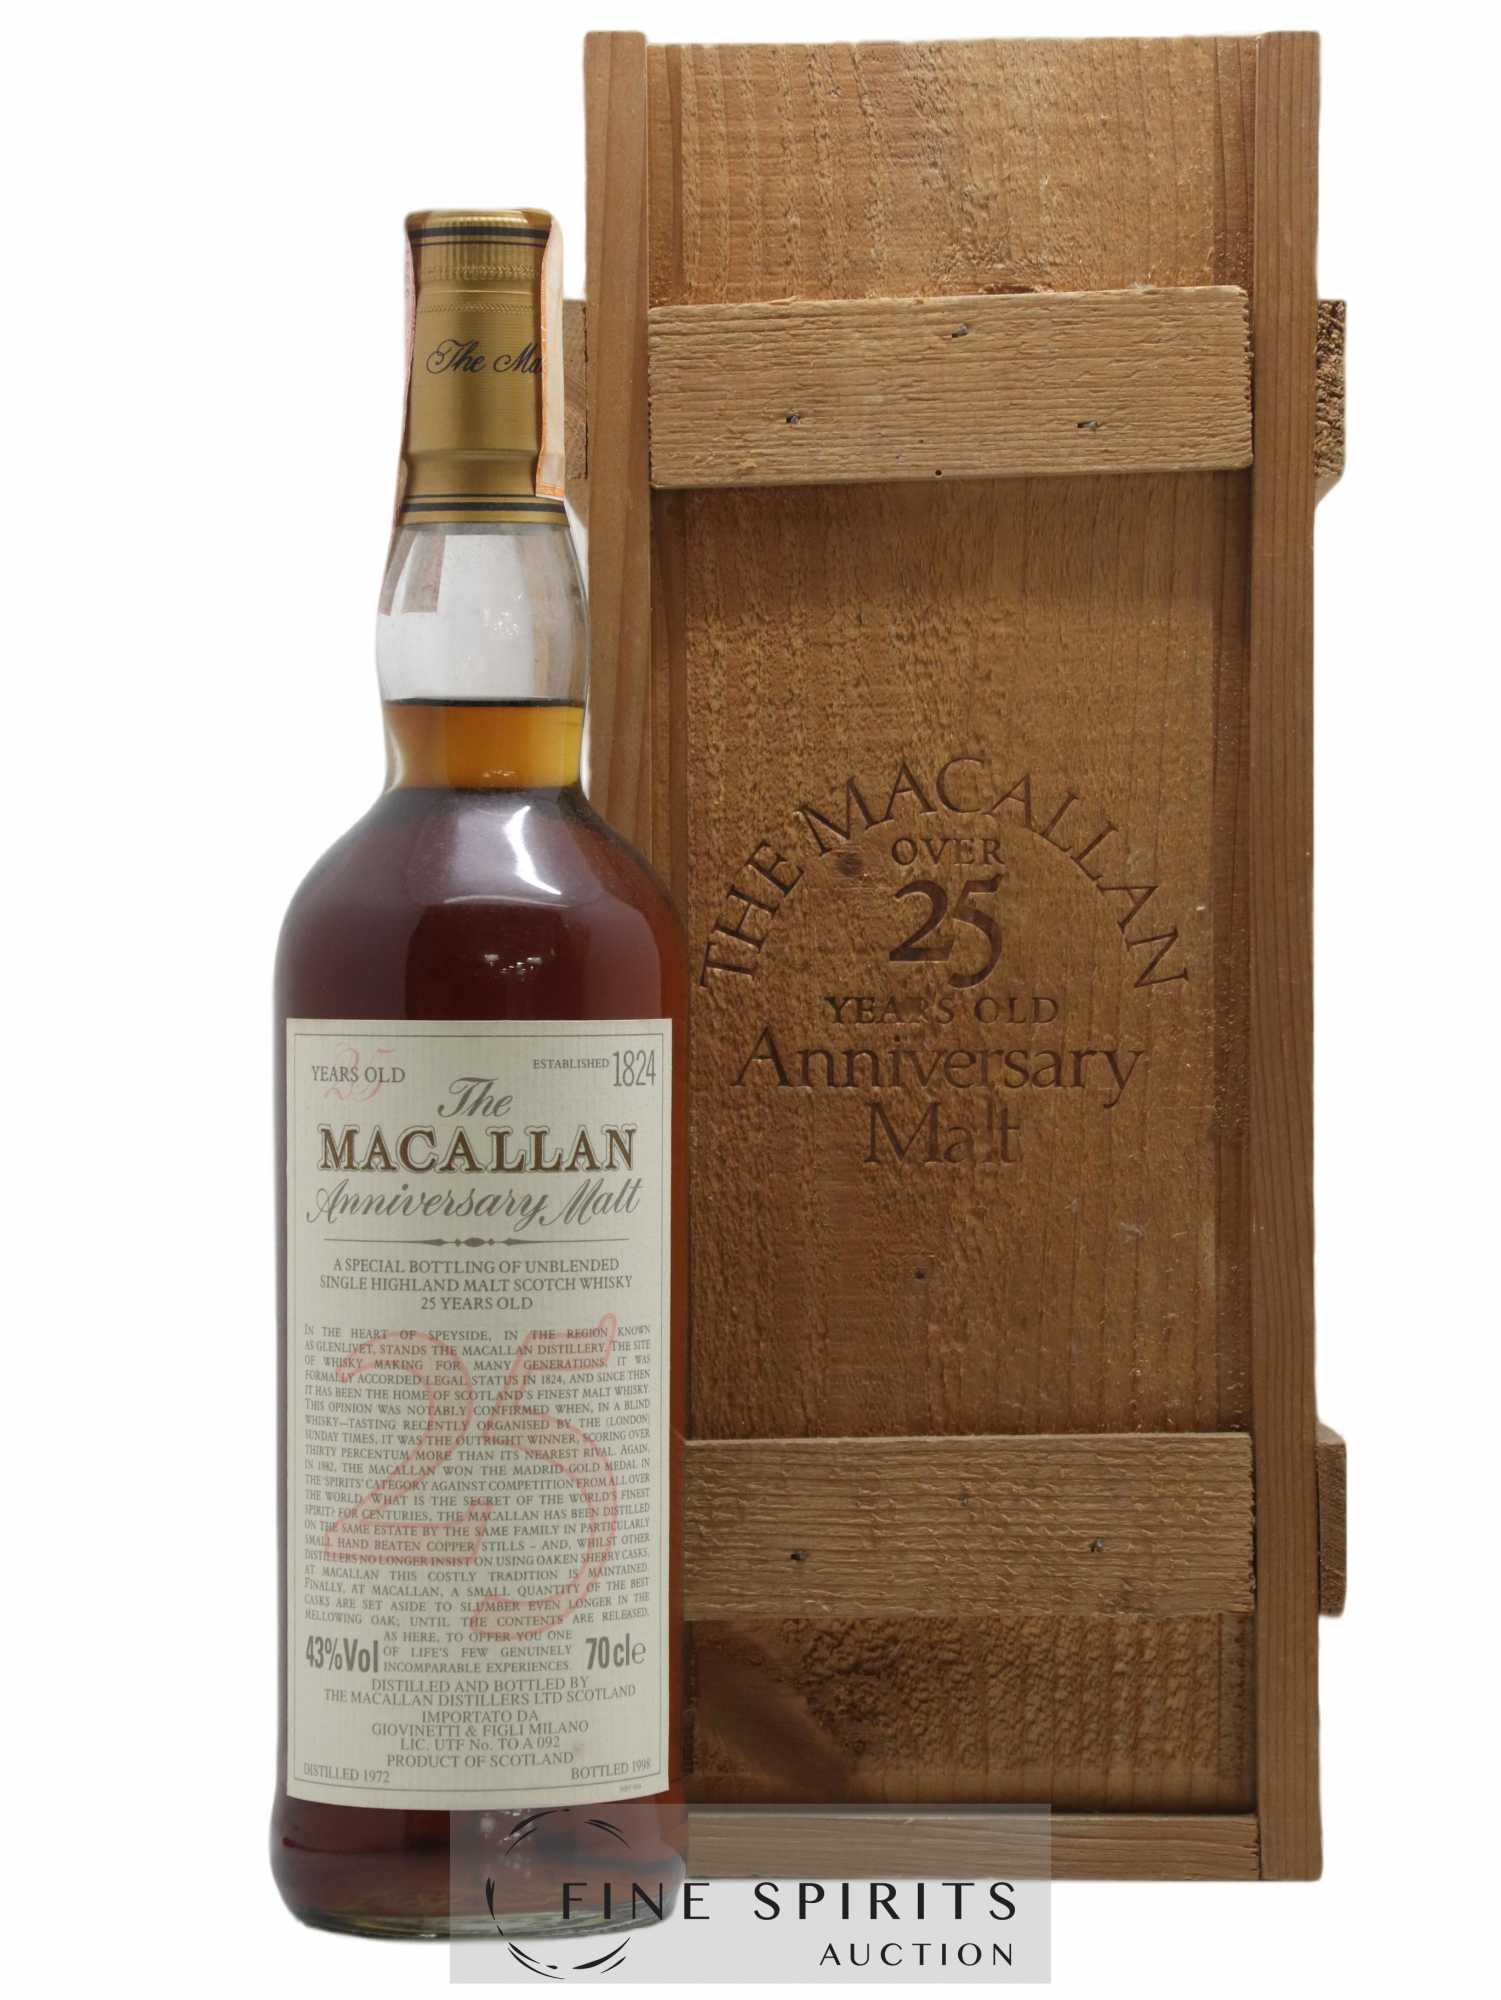 Macallan (The) 25 years 1972 Of. Anniversary Malt bottled 1998 Special Bottling 